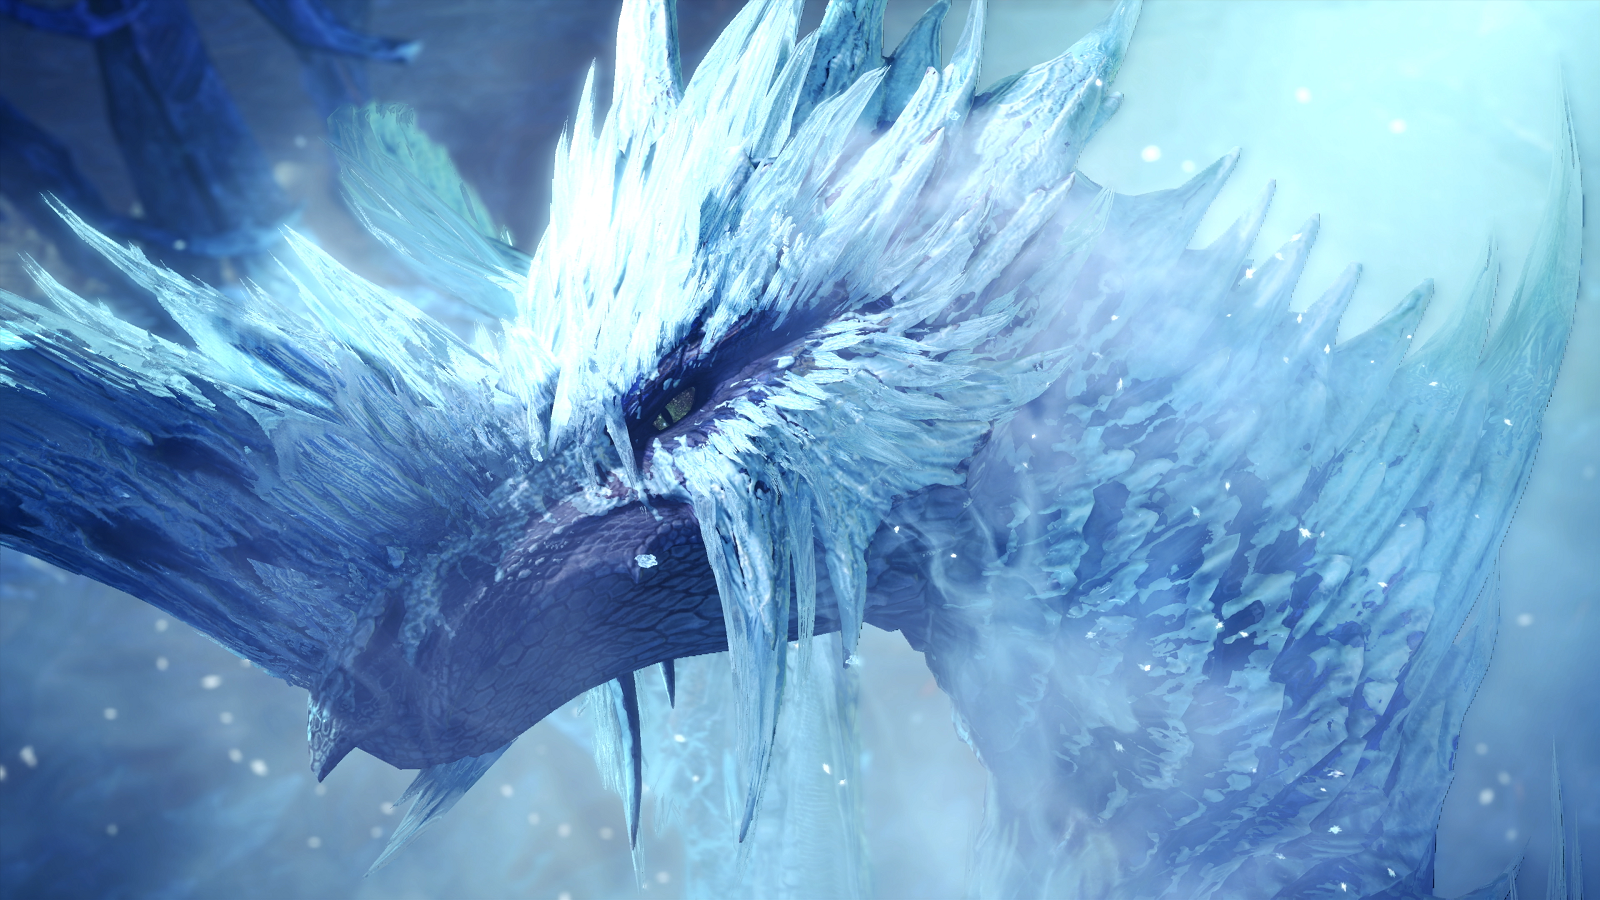 Monster Hunter World Adds New Elder Dragon And Quest Type - GameSpot